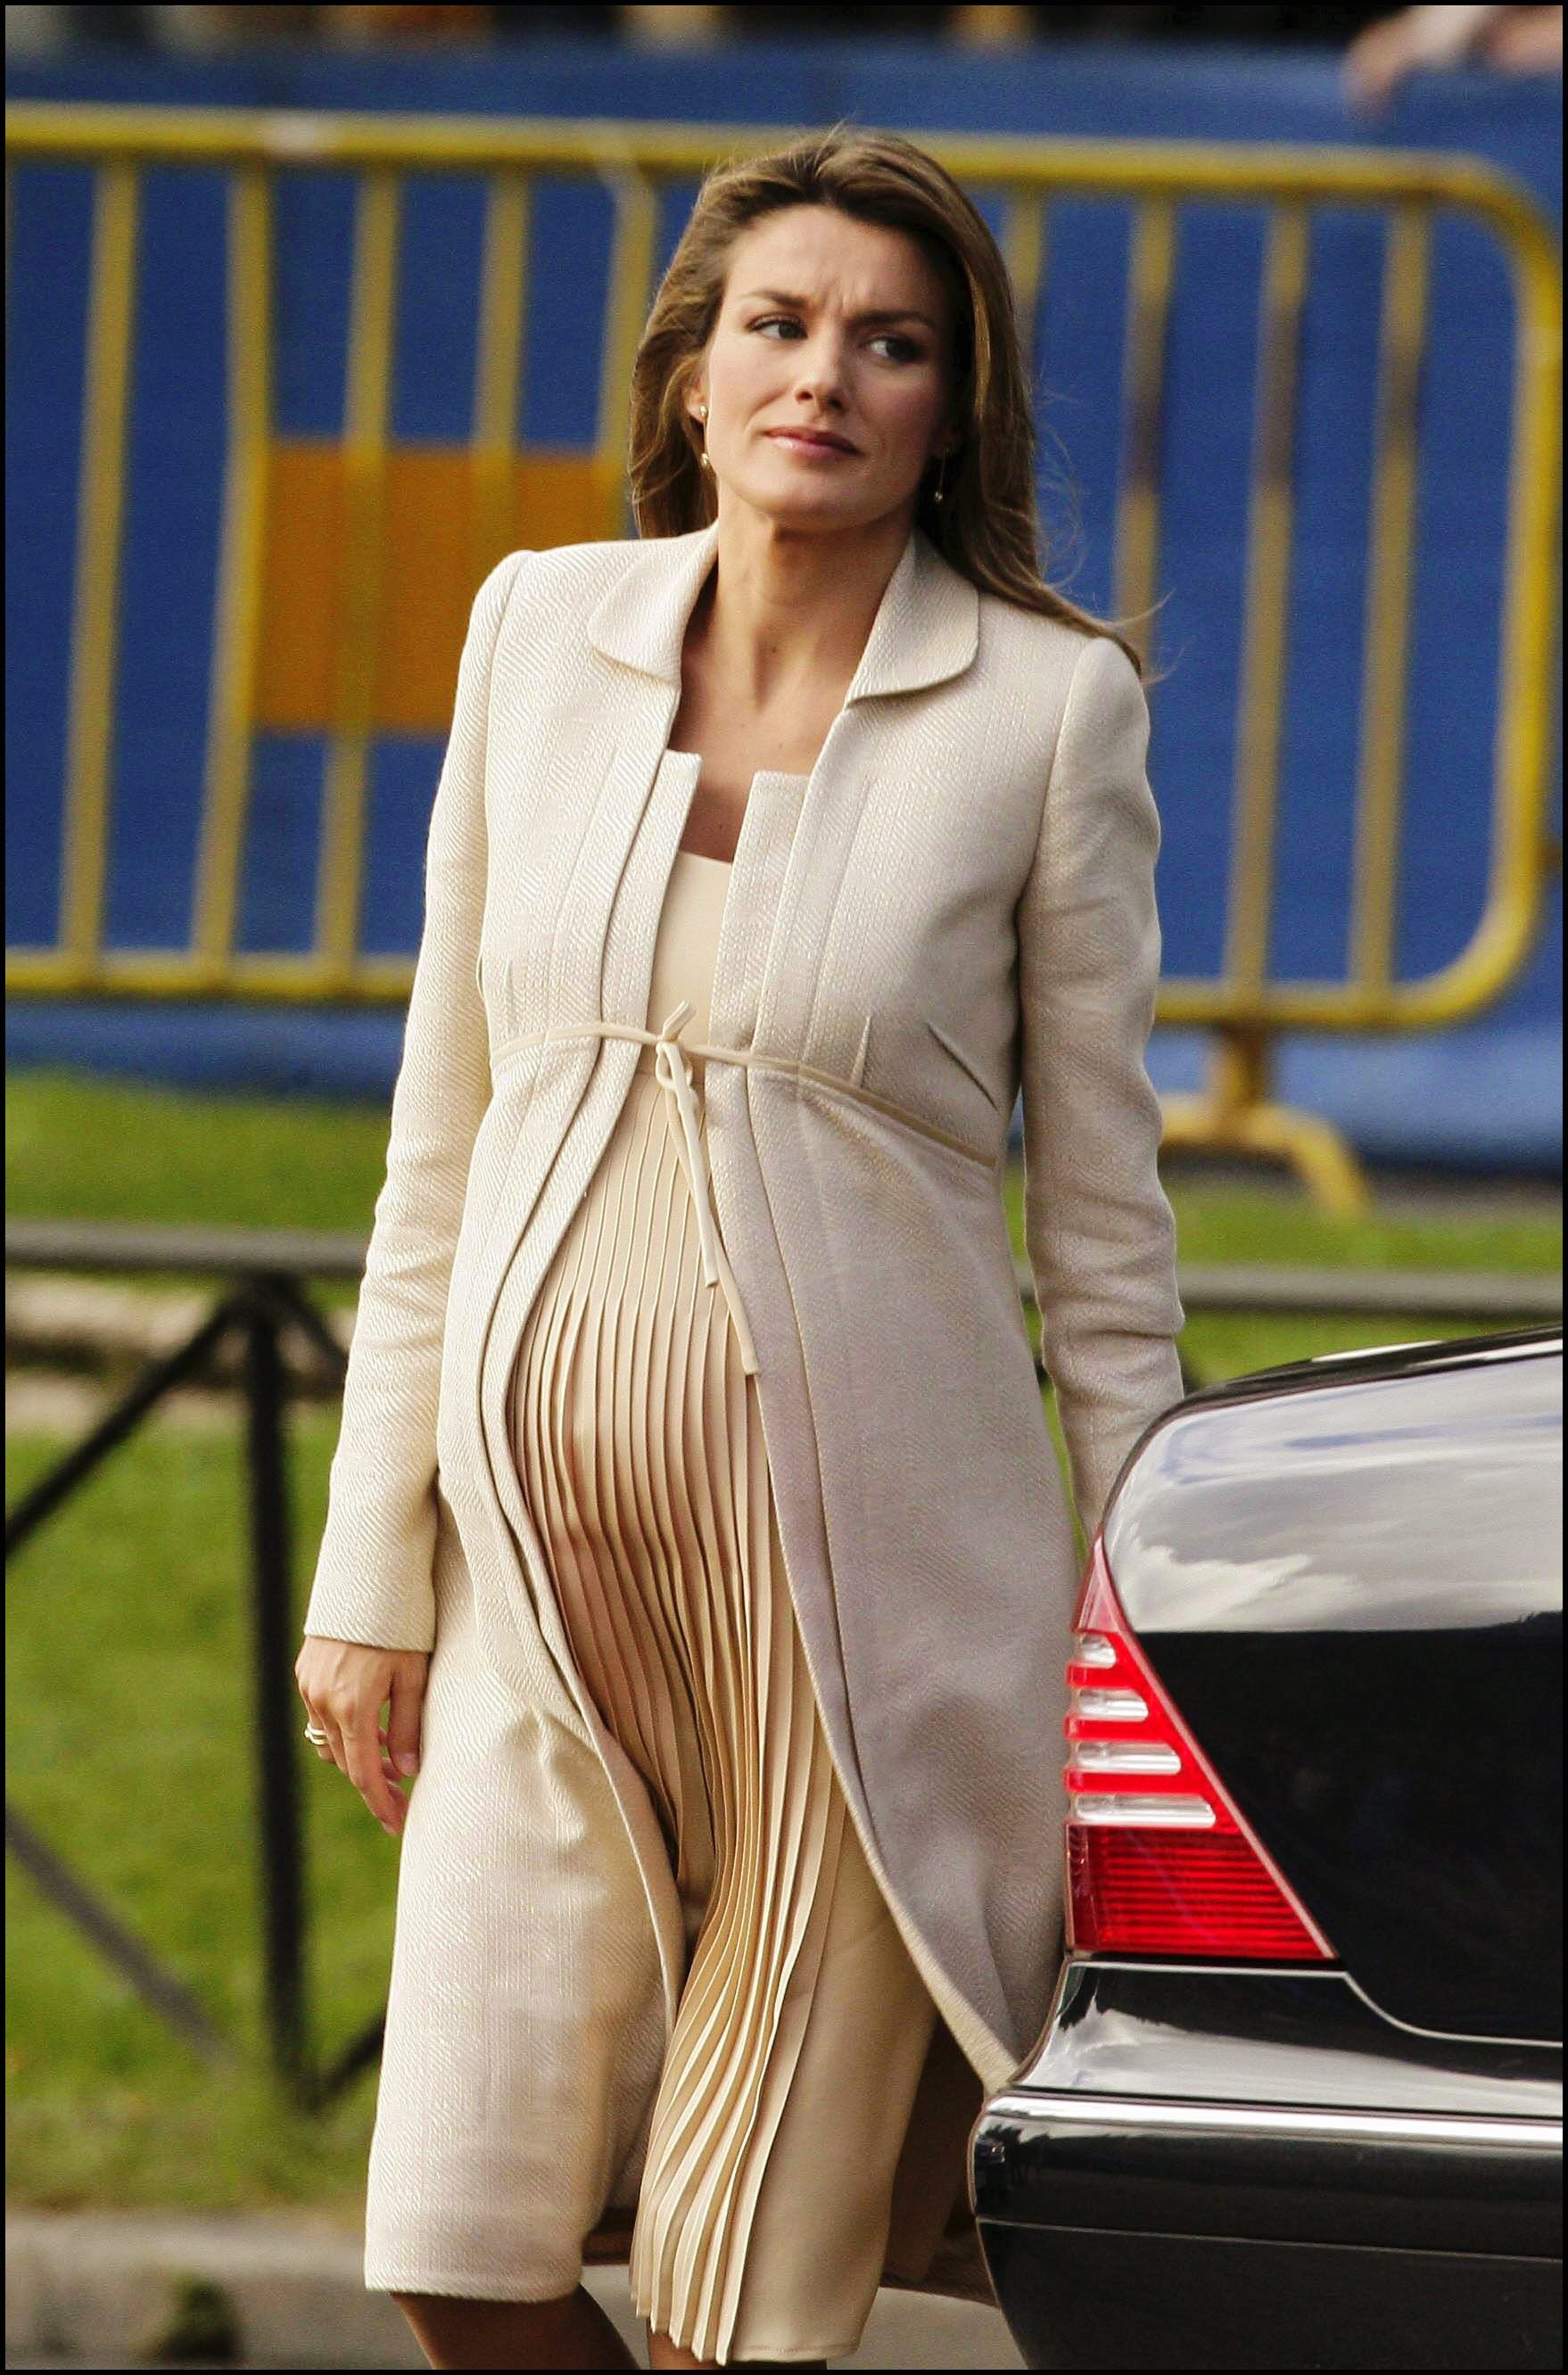 Princess Letizia in Madrid on October 12, 2005.